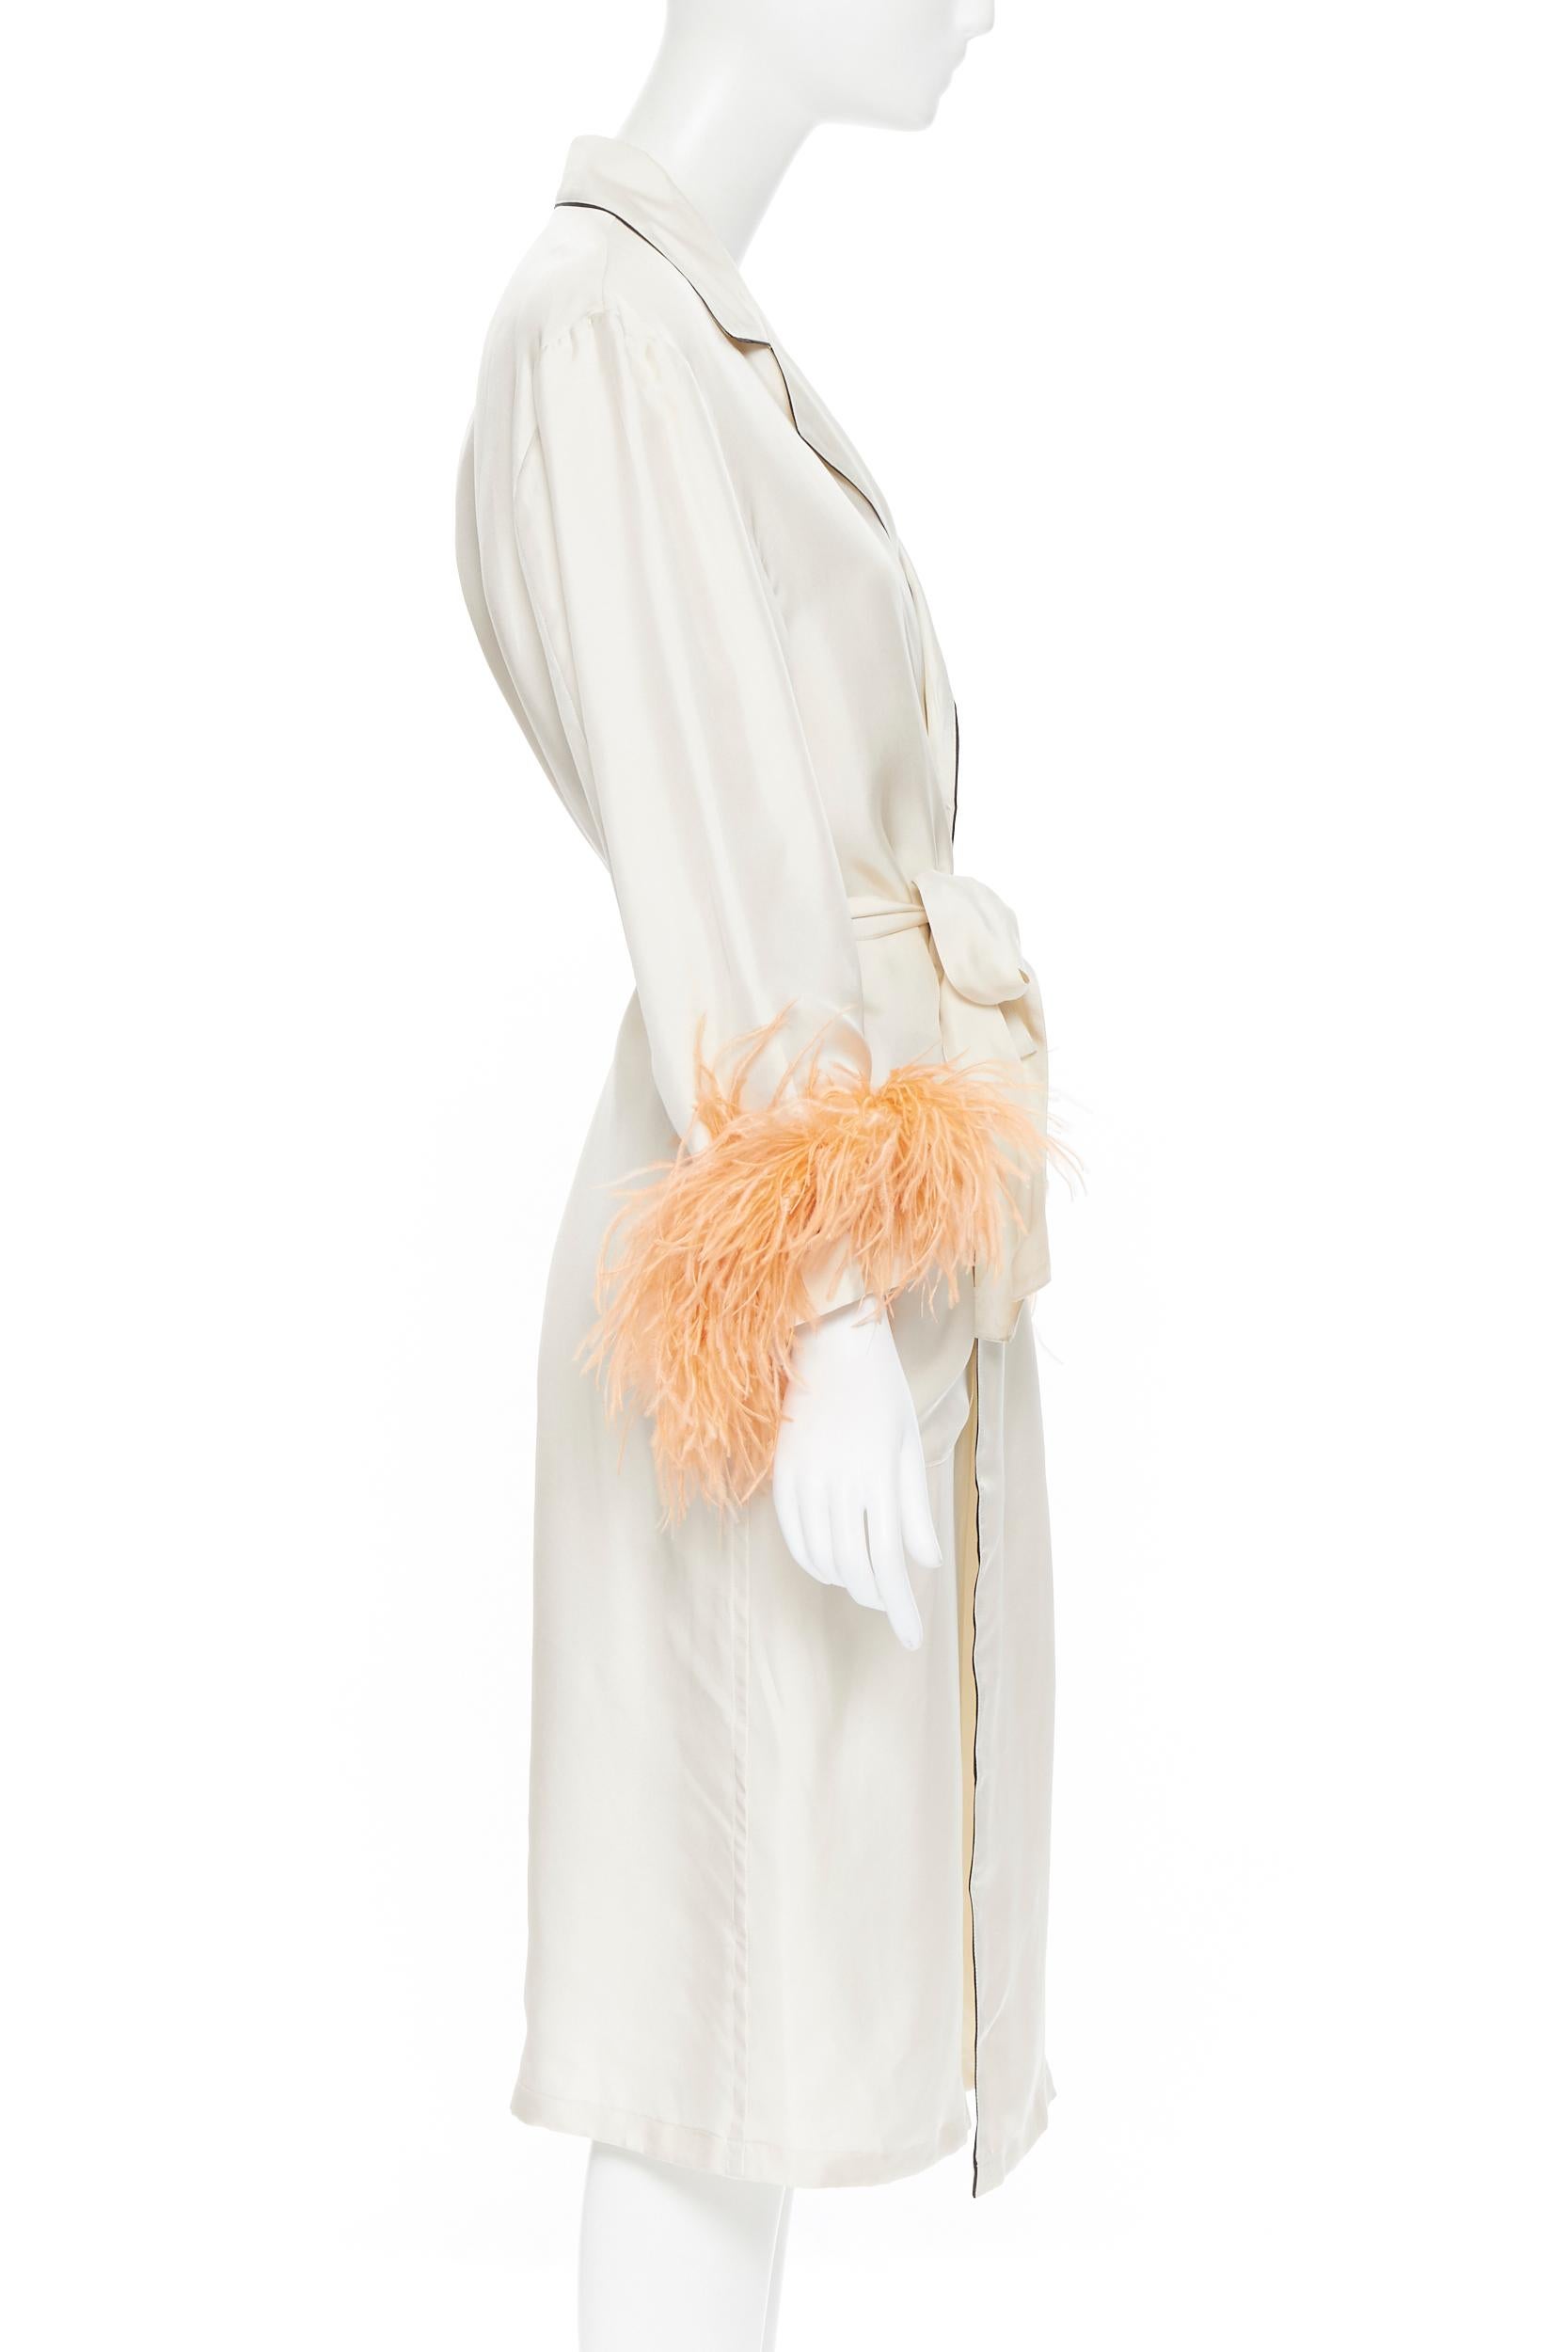 Women's new PRADA 100% silk cream black piping orange feather cuff robe jacket Rihanna M